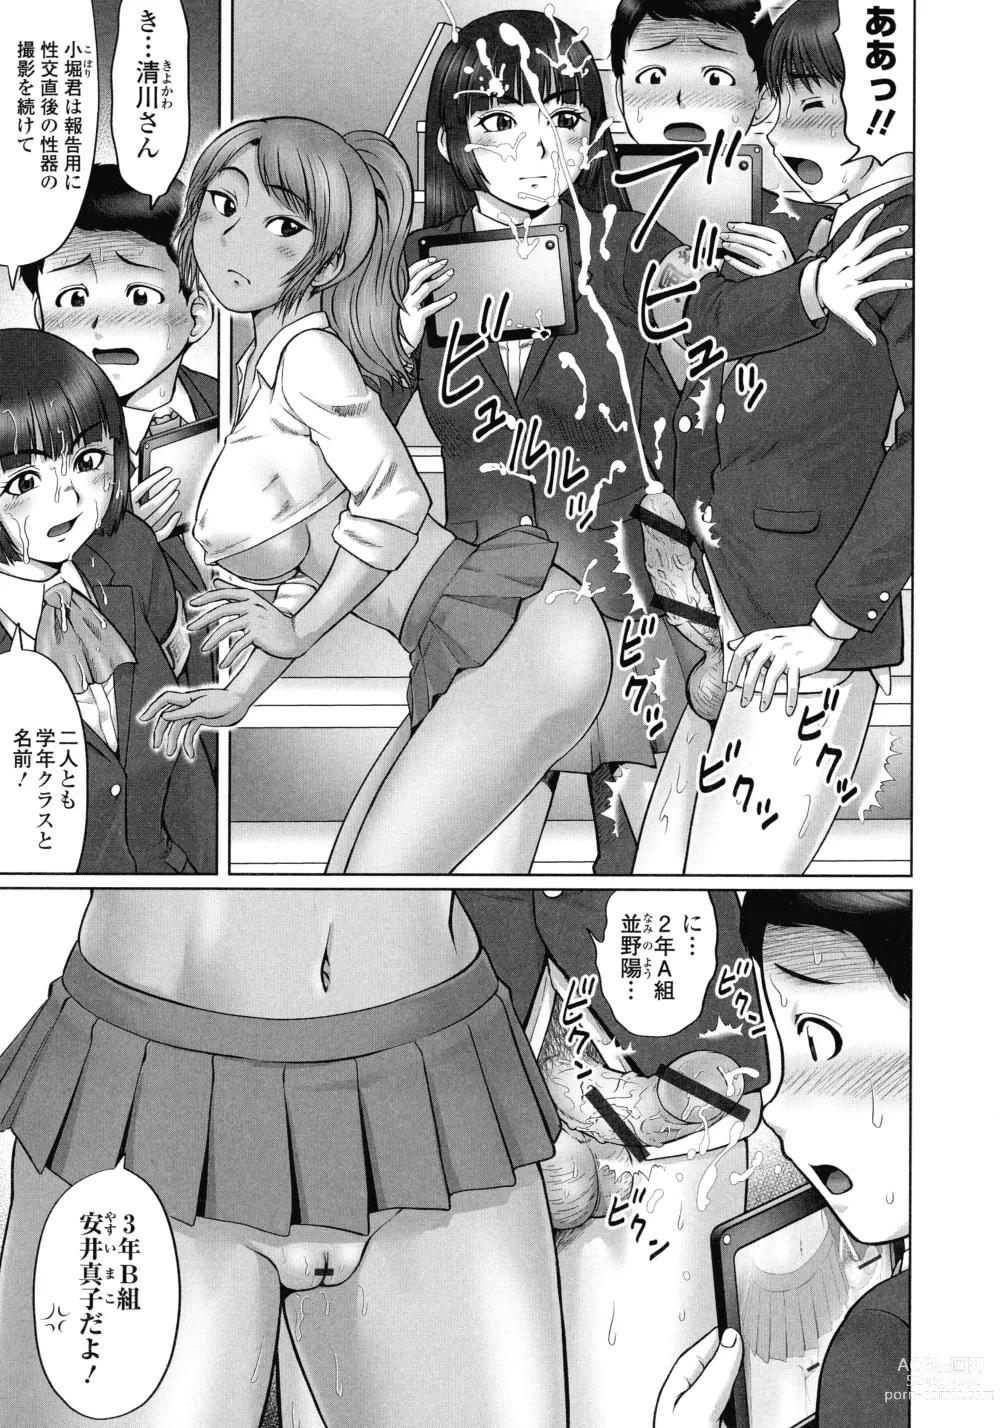 Page 6 of manga Doutei Z Sedai - Doutei Z Generation